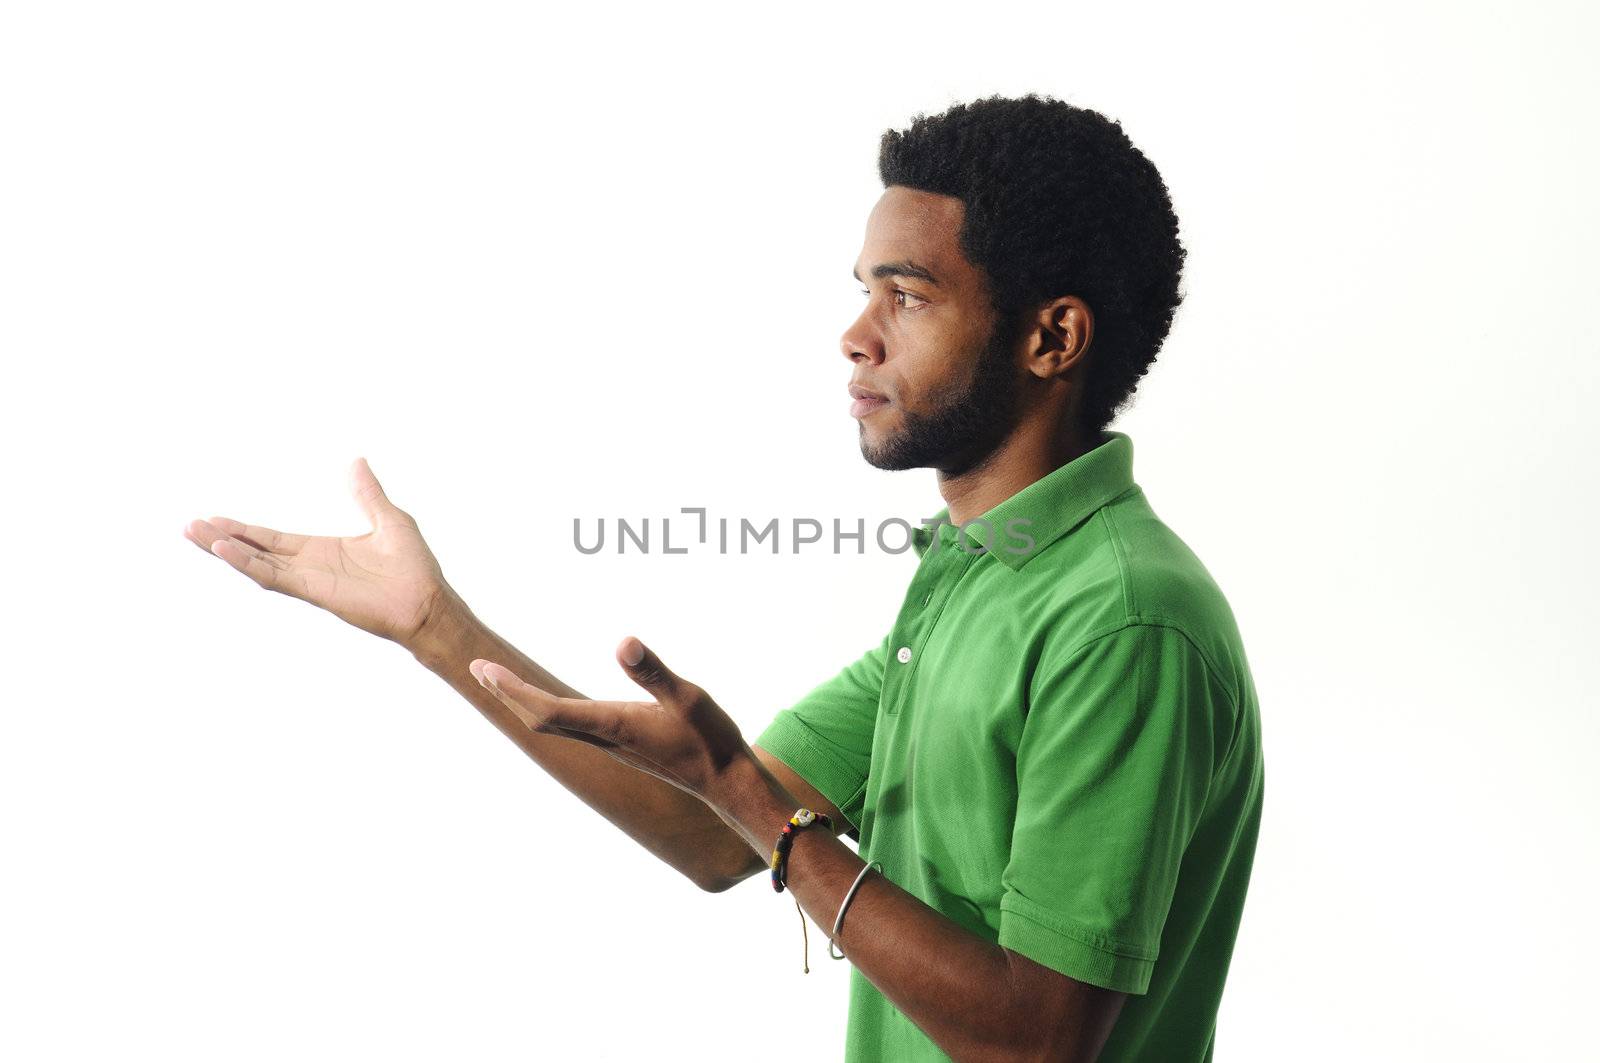 African american man gesturing by rgbspace